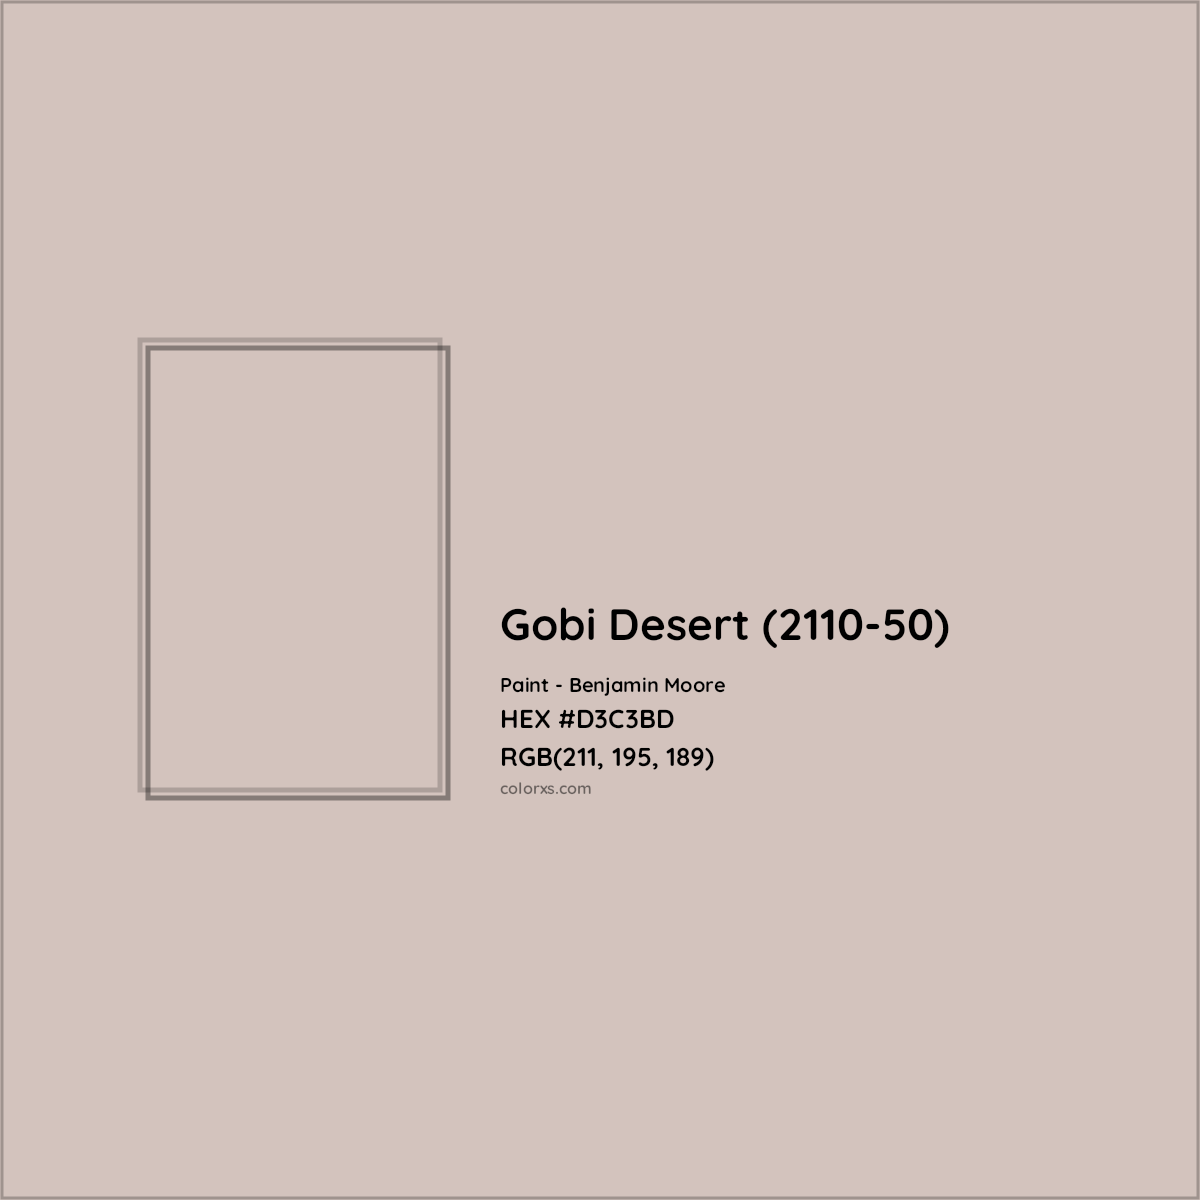 HEX #D3C3BD Gobi Desert (2110-50) Paint Benjamin Moore - Color Code